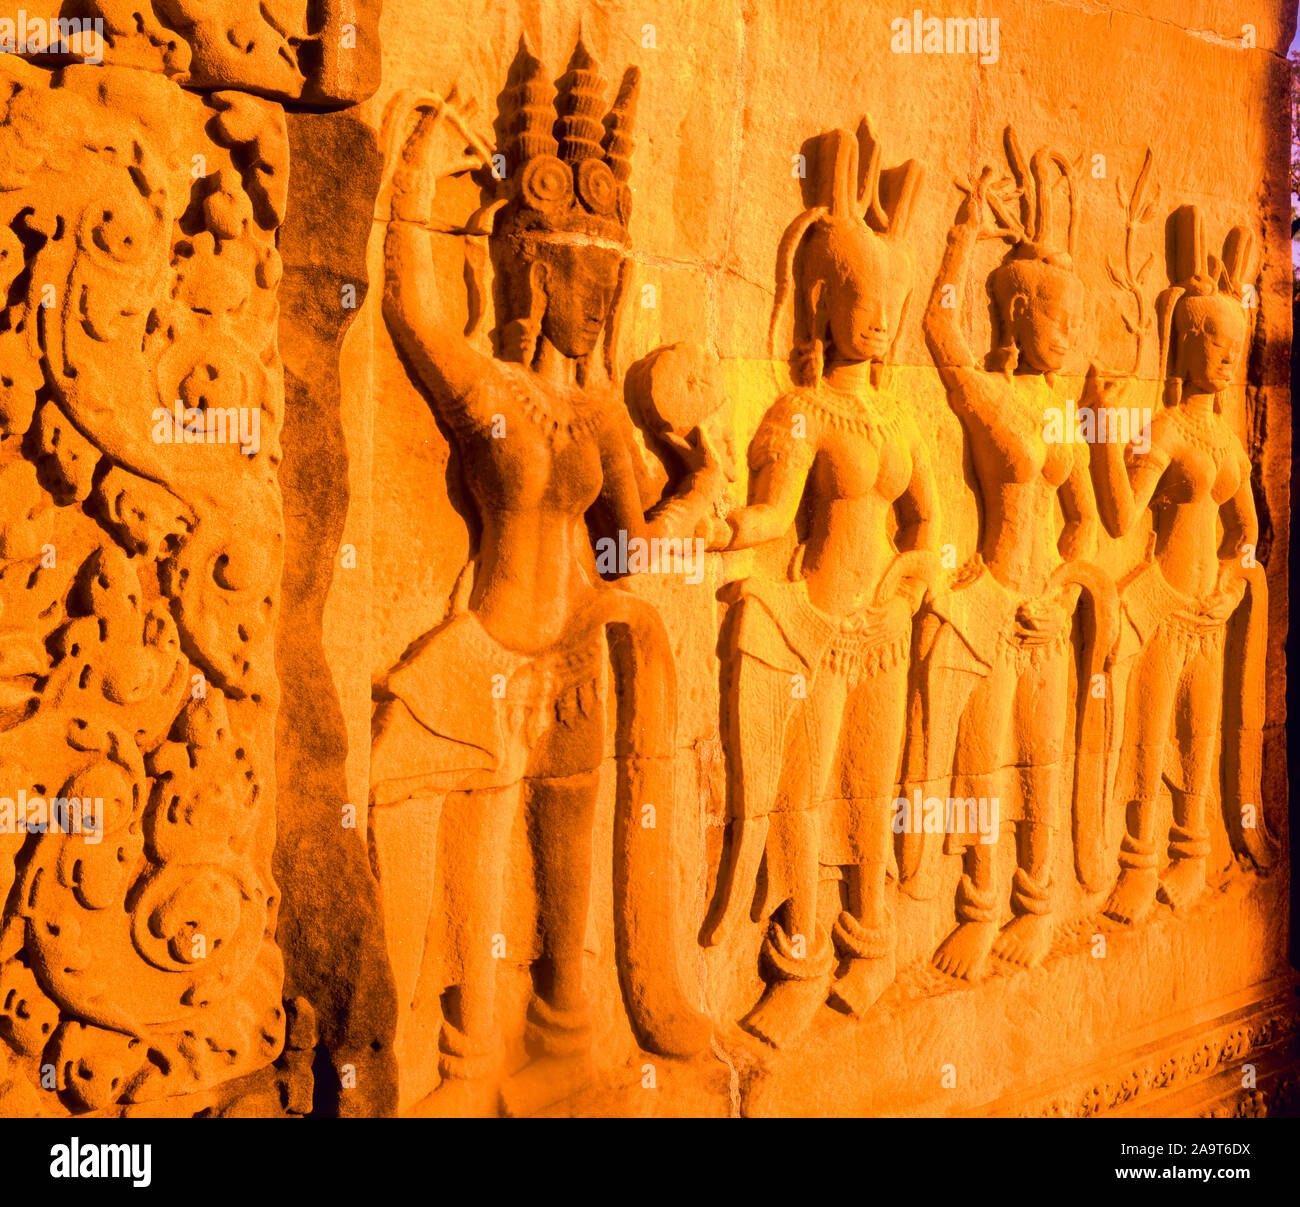 Wand Schnitzereien bei Sonnenuntergang, Bayon Tempel, Angkor Watt Archäologischen Park, Kambodscha, Stadt Angkor Thom, erbaut 1100-1200, Khymer Kultur rins Stockfoto